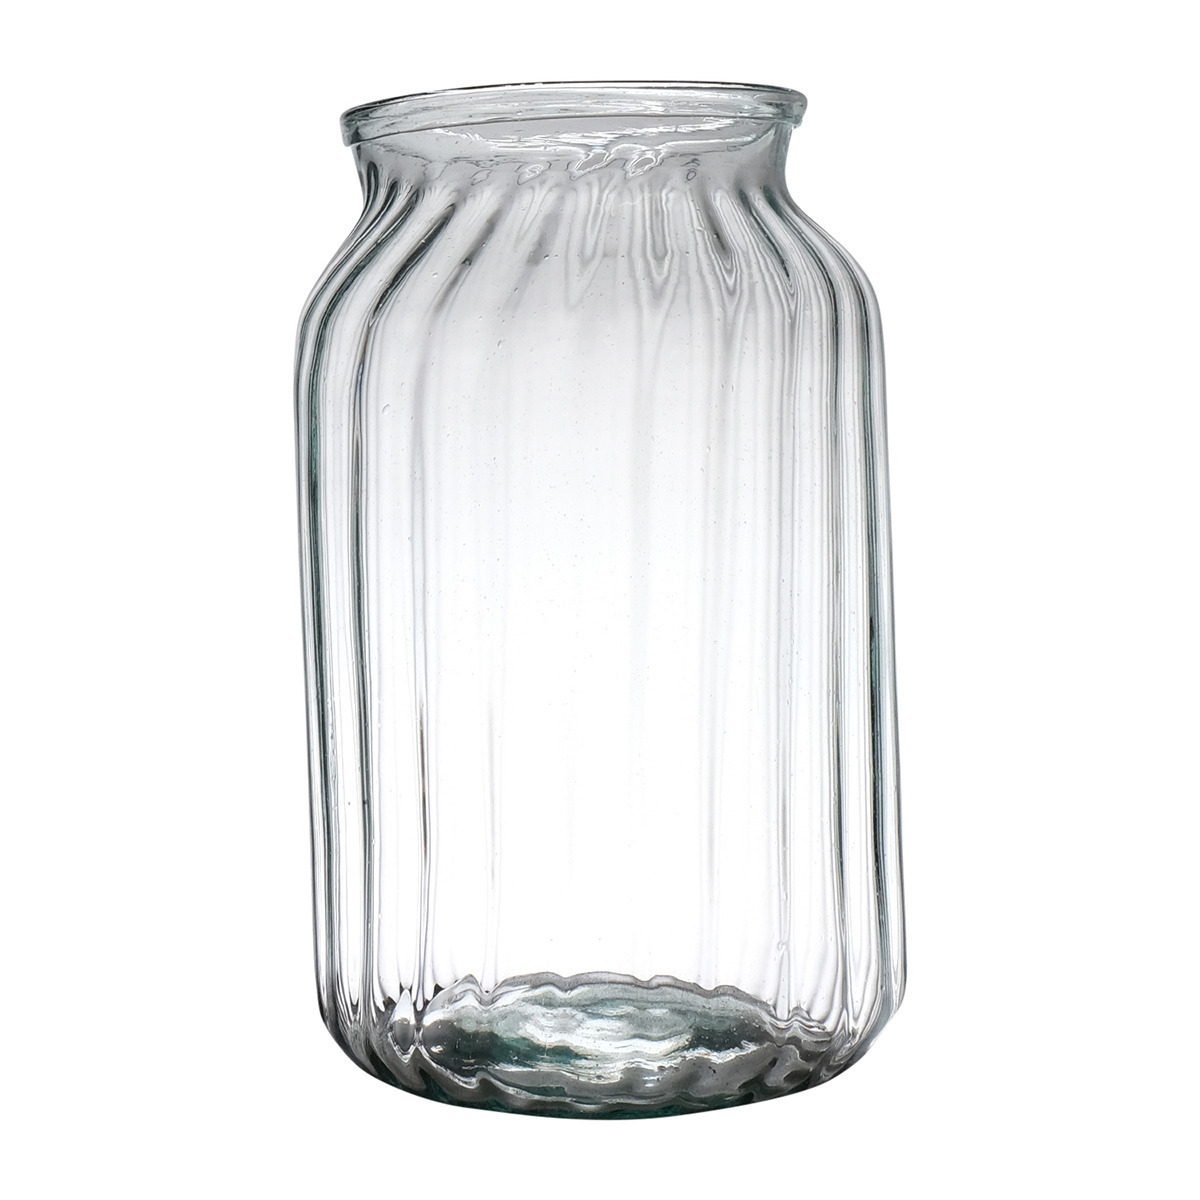 Hakbijl Glass Bloemenvaas Organic - transparant - eco glas - D18 x H30 cm - Melkbus vaas -